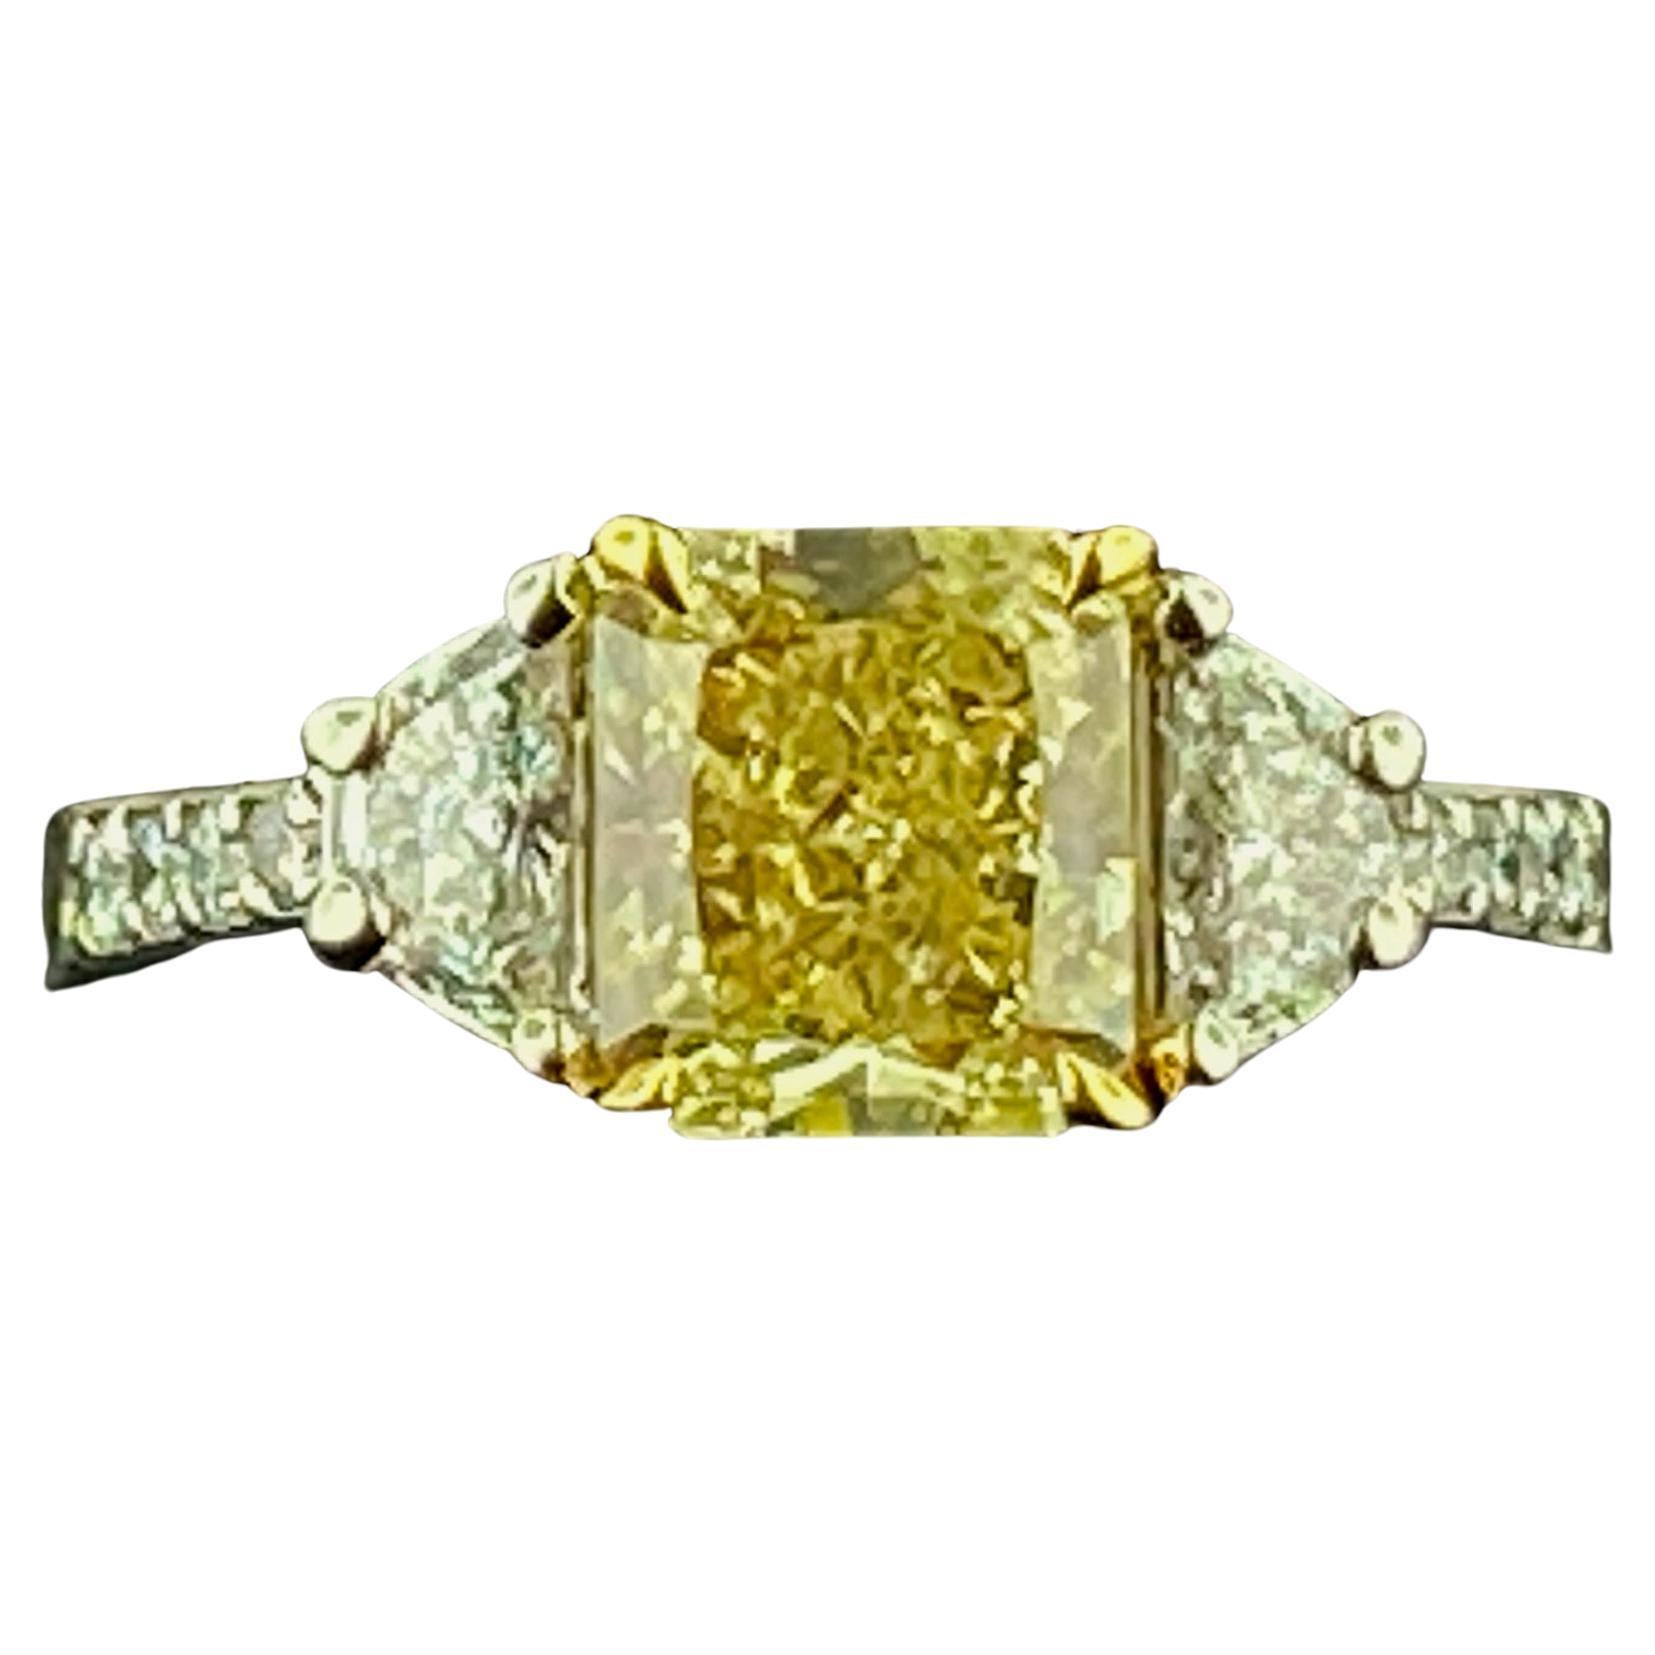 22 KT Yellow Gold & Platinum 1.82 Ct Fancy Yellow Radiant Cut Diamond Ring